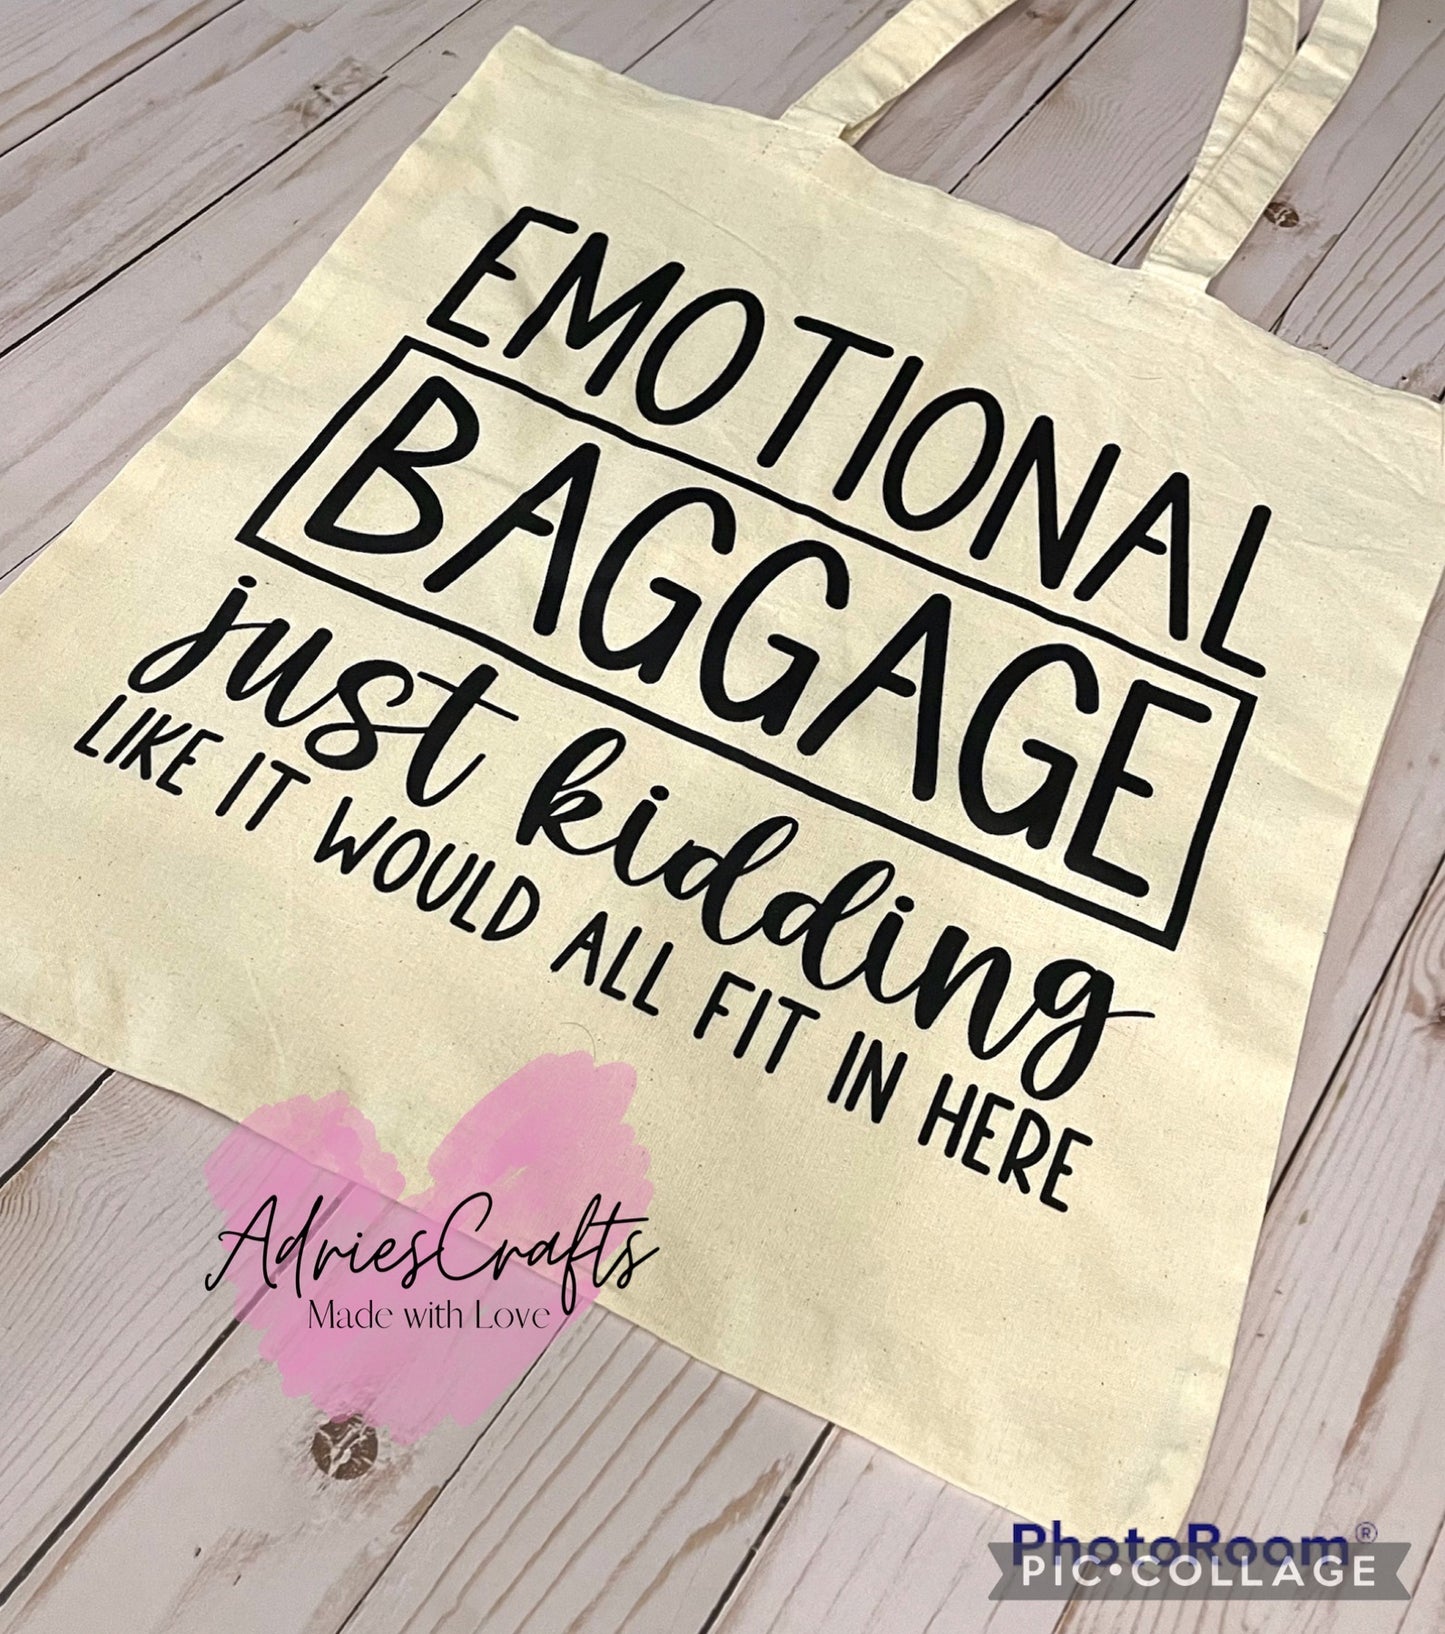 Emotional Bag Tote